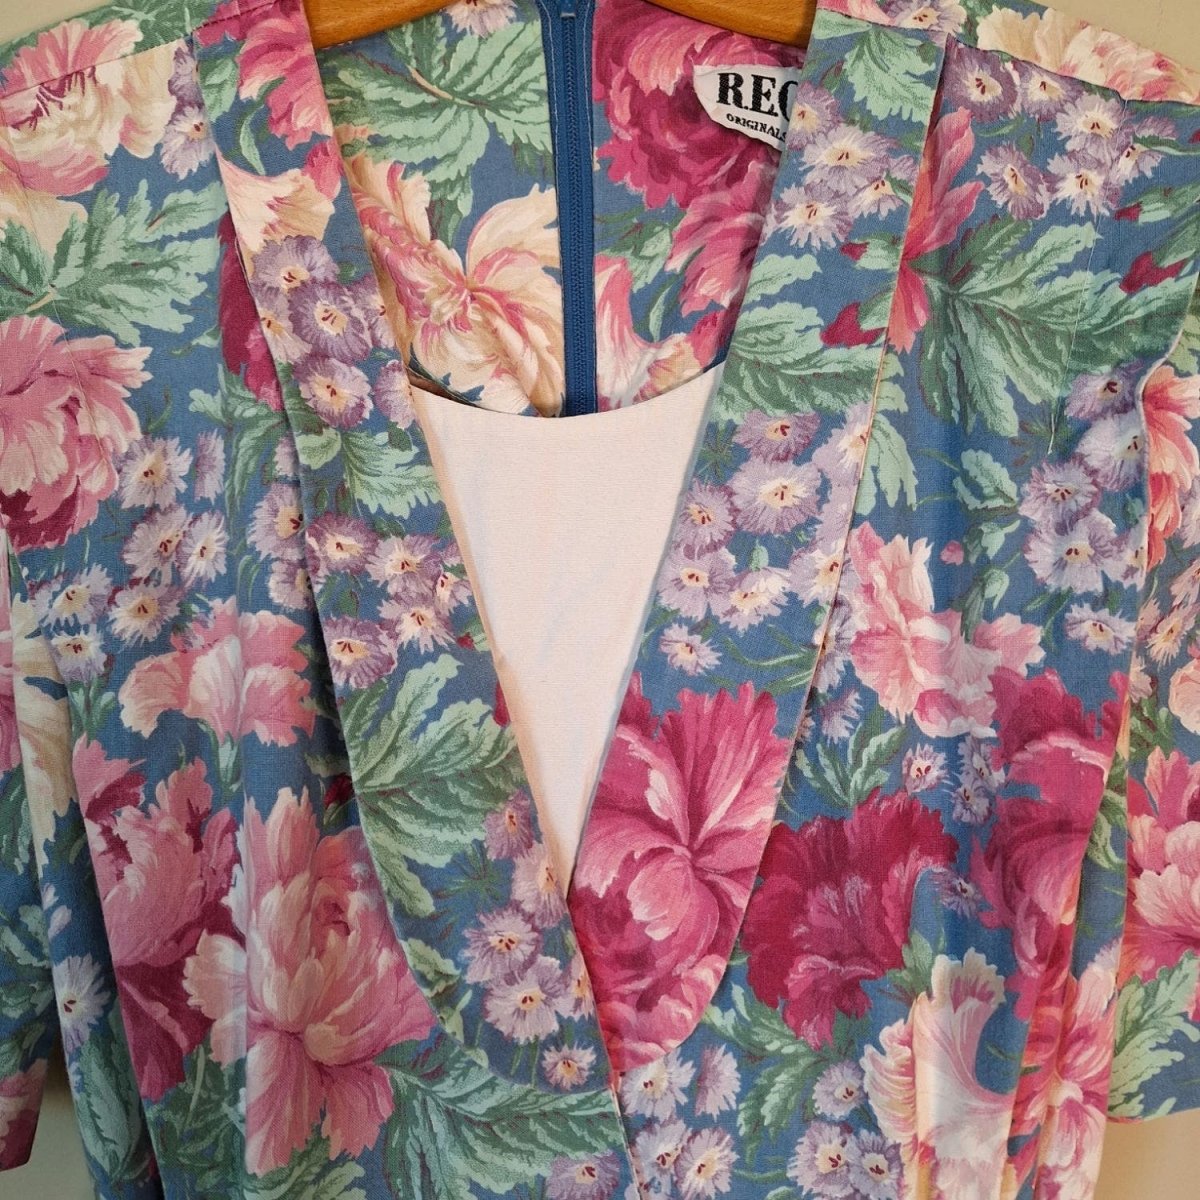 Vintage 80s Floral Cotton Midi Day Dress w/belt Women Size Medium - themallvintage The Mall Vintage